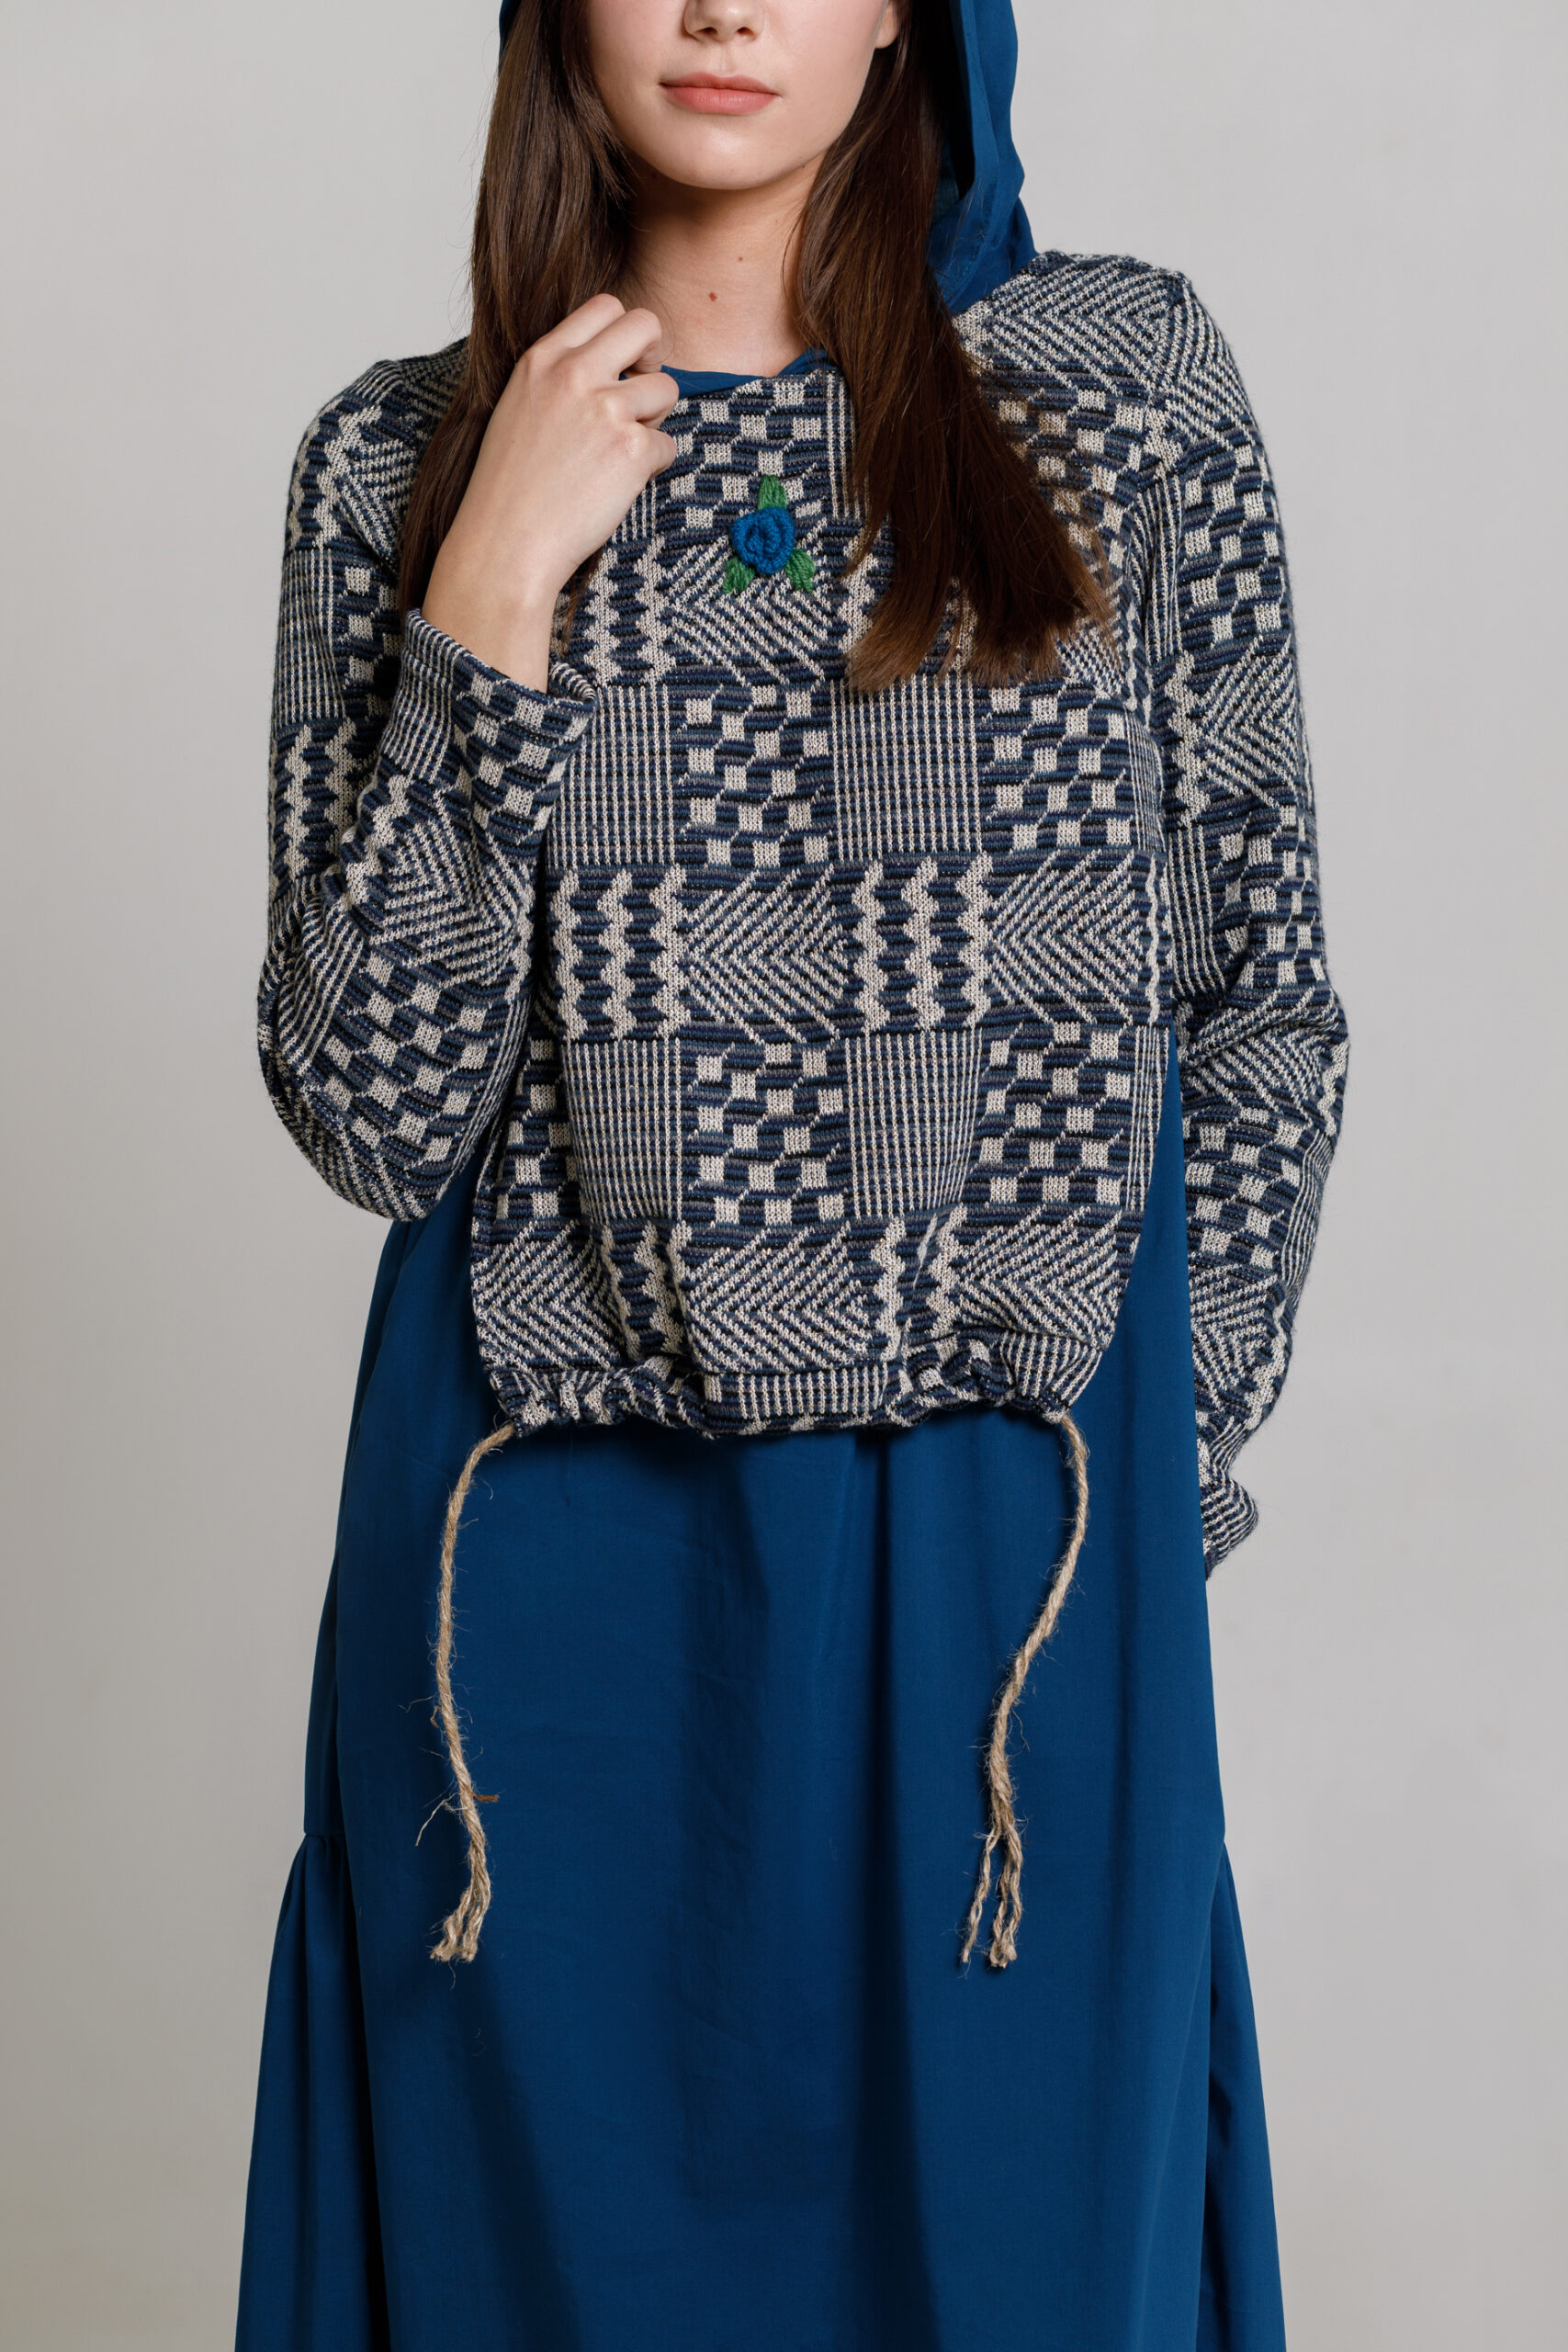 Dress INDRA casual poplin and felt. Natural fabrics, original design, handmade embroidery